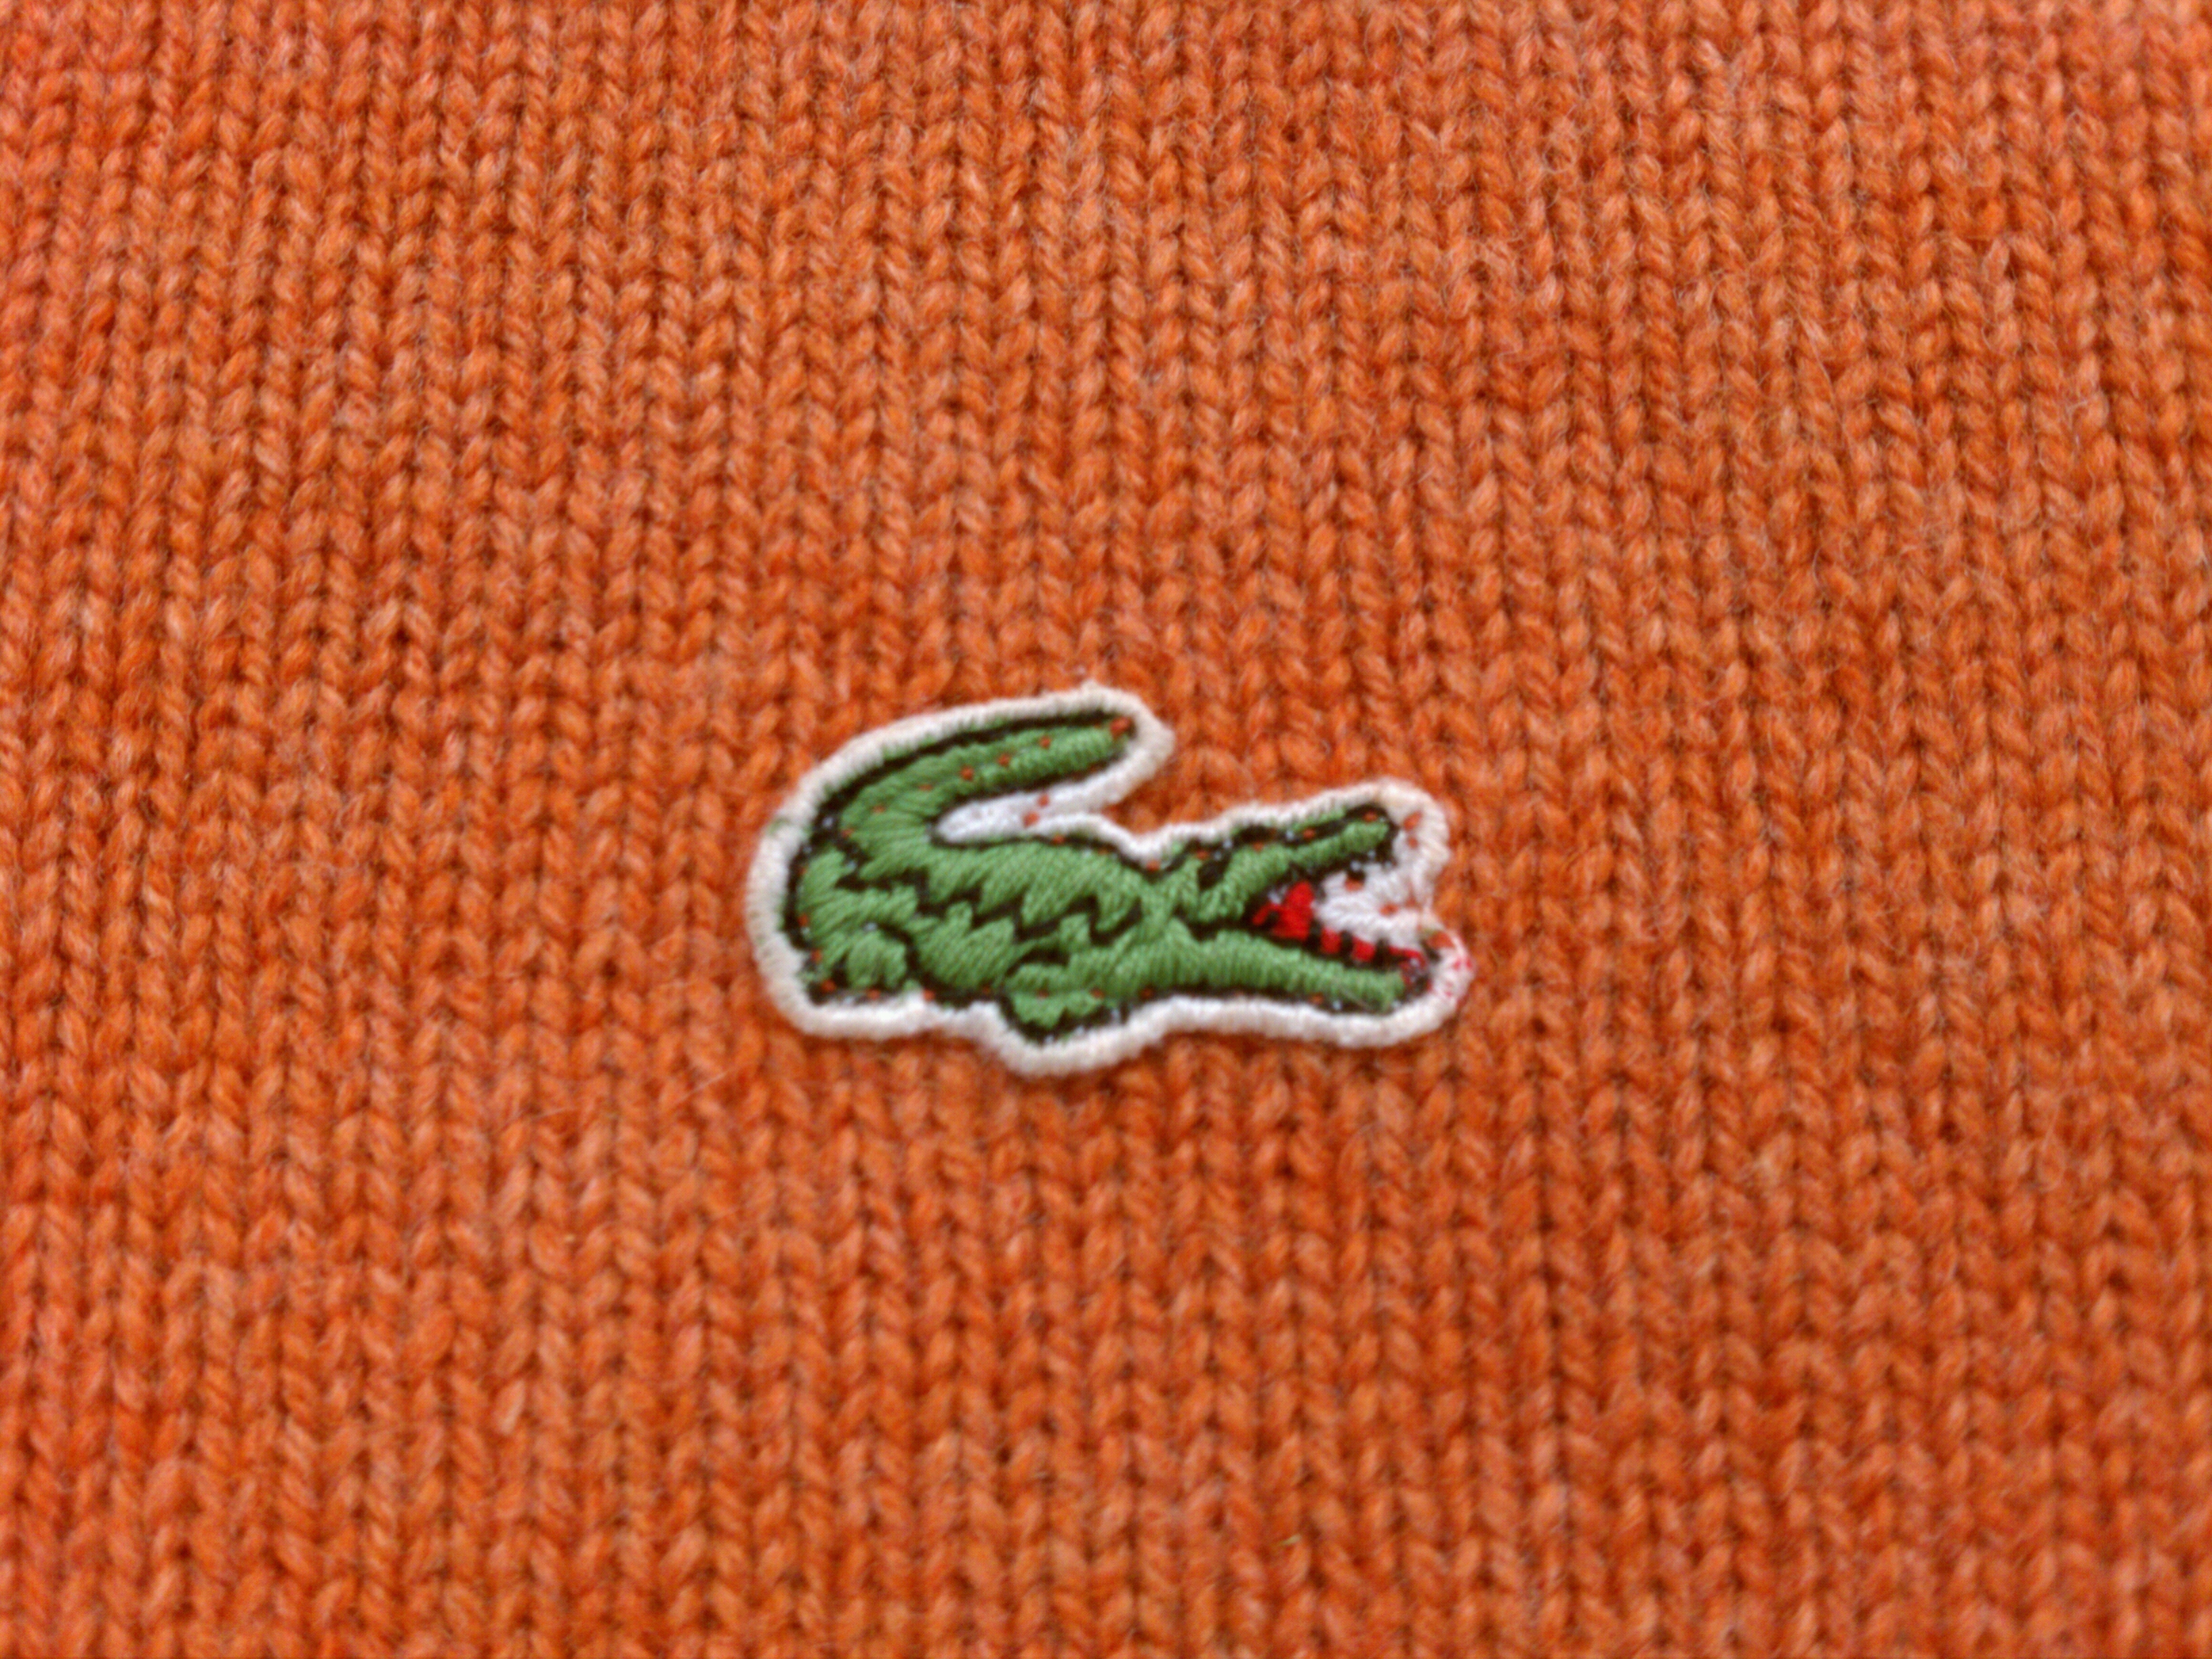 alligator symbol on clothes